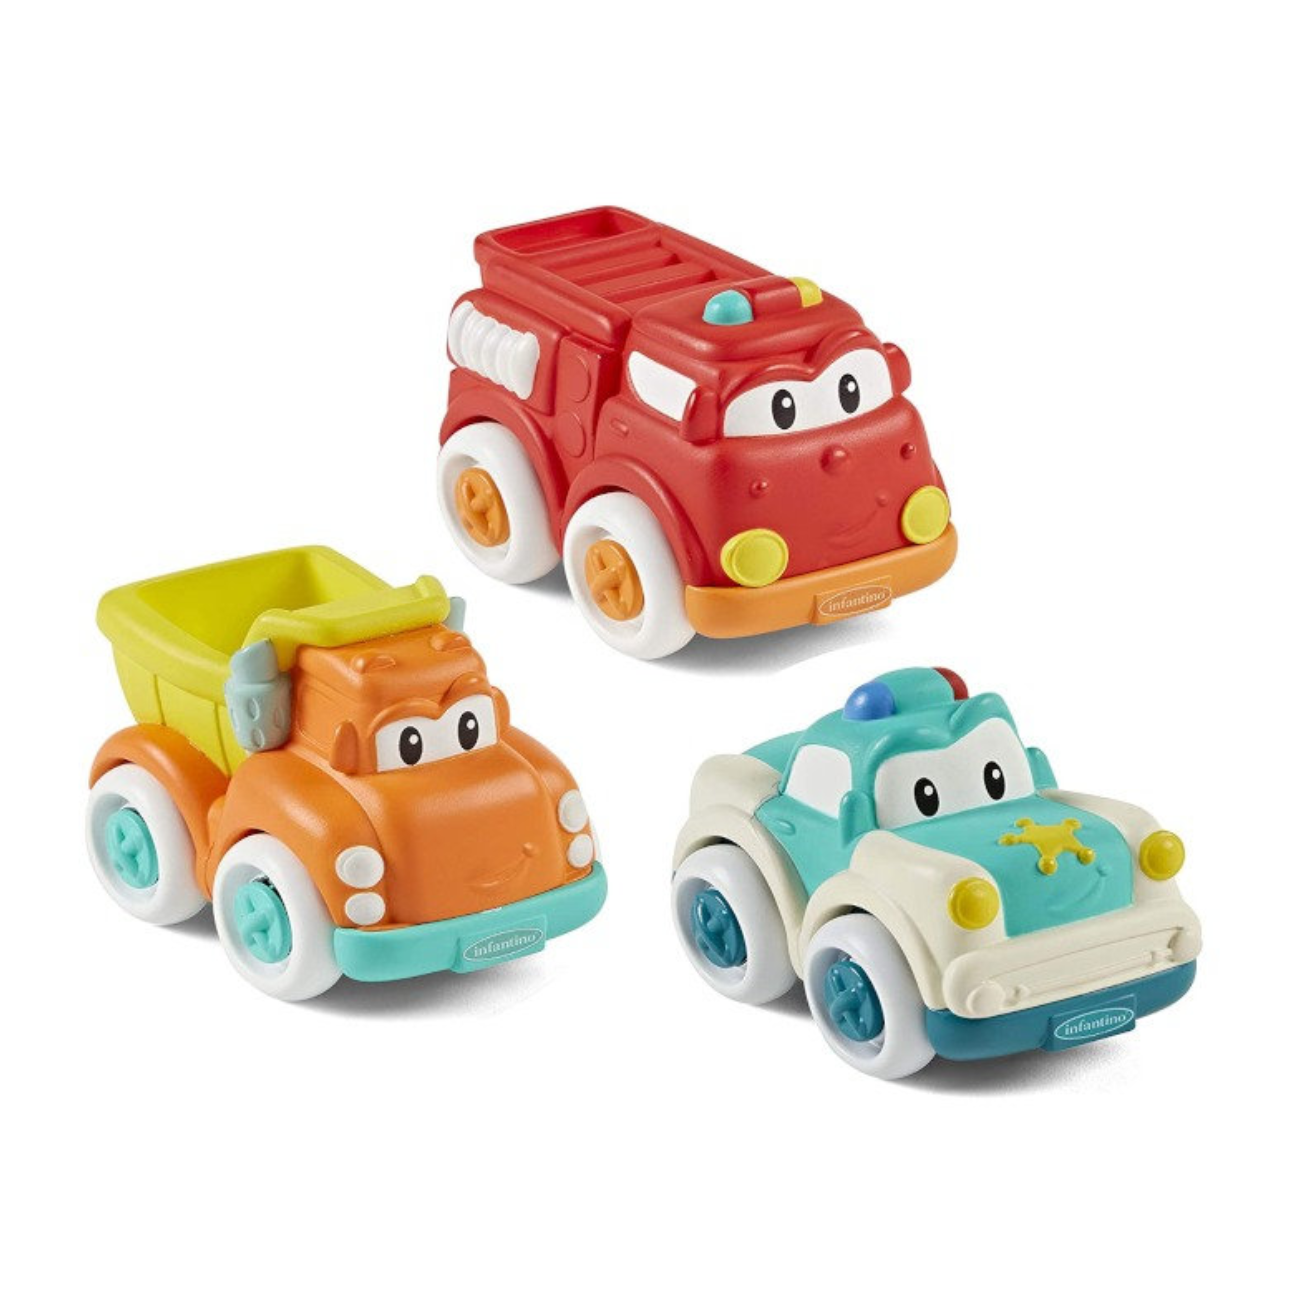 Infantino - Juguete set de 3 camiones